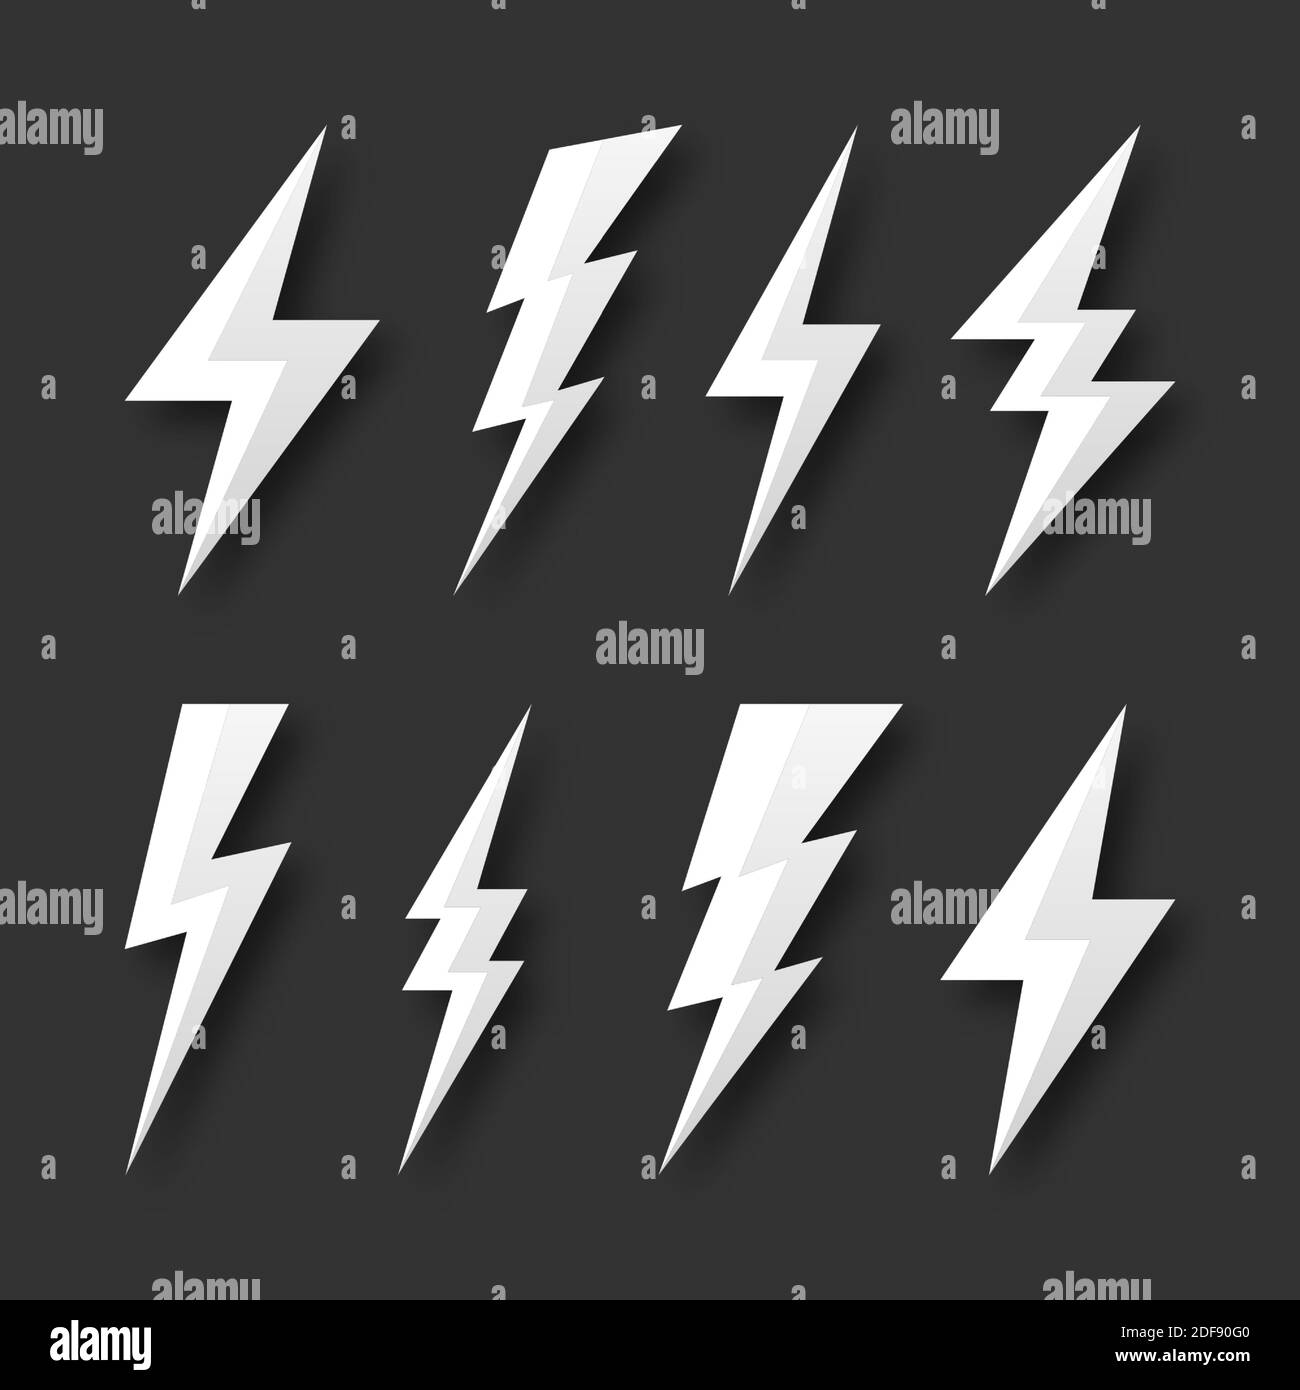 Lightning bolt icons collection. Flash symbol, thunderbolt. Simple